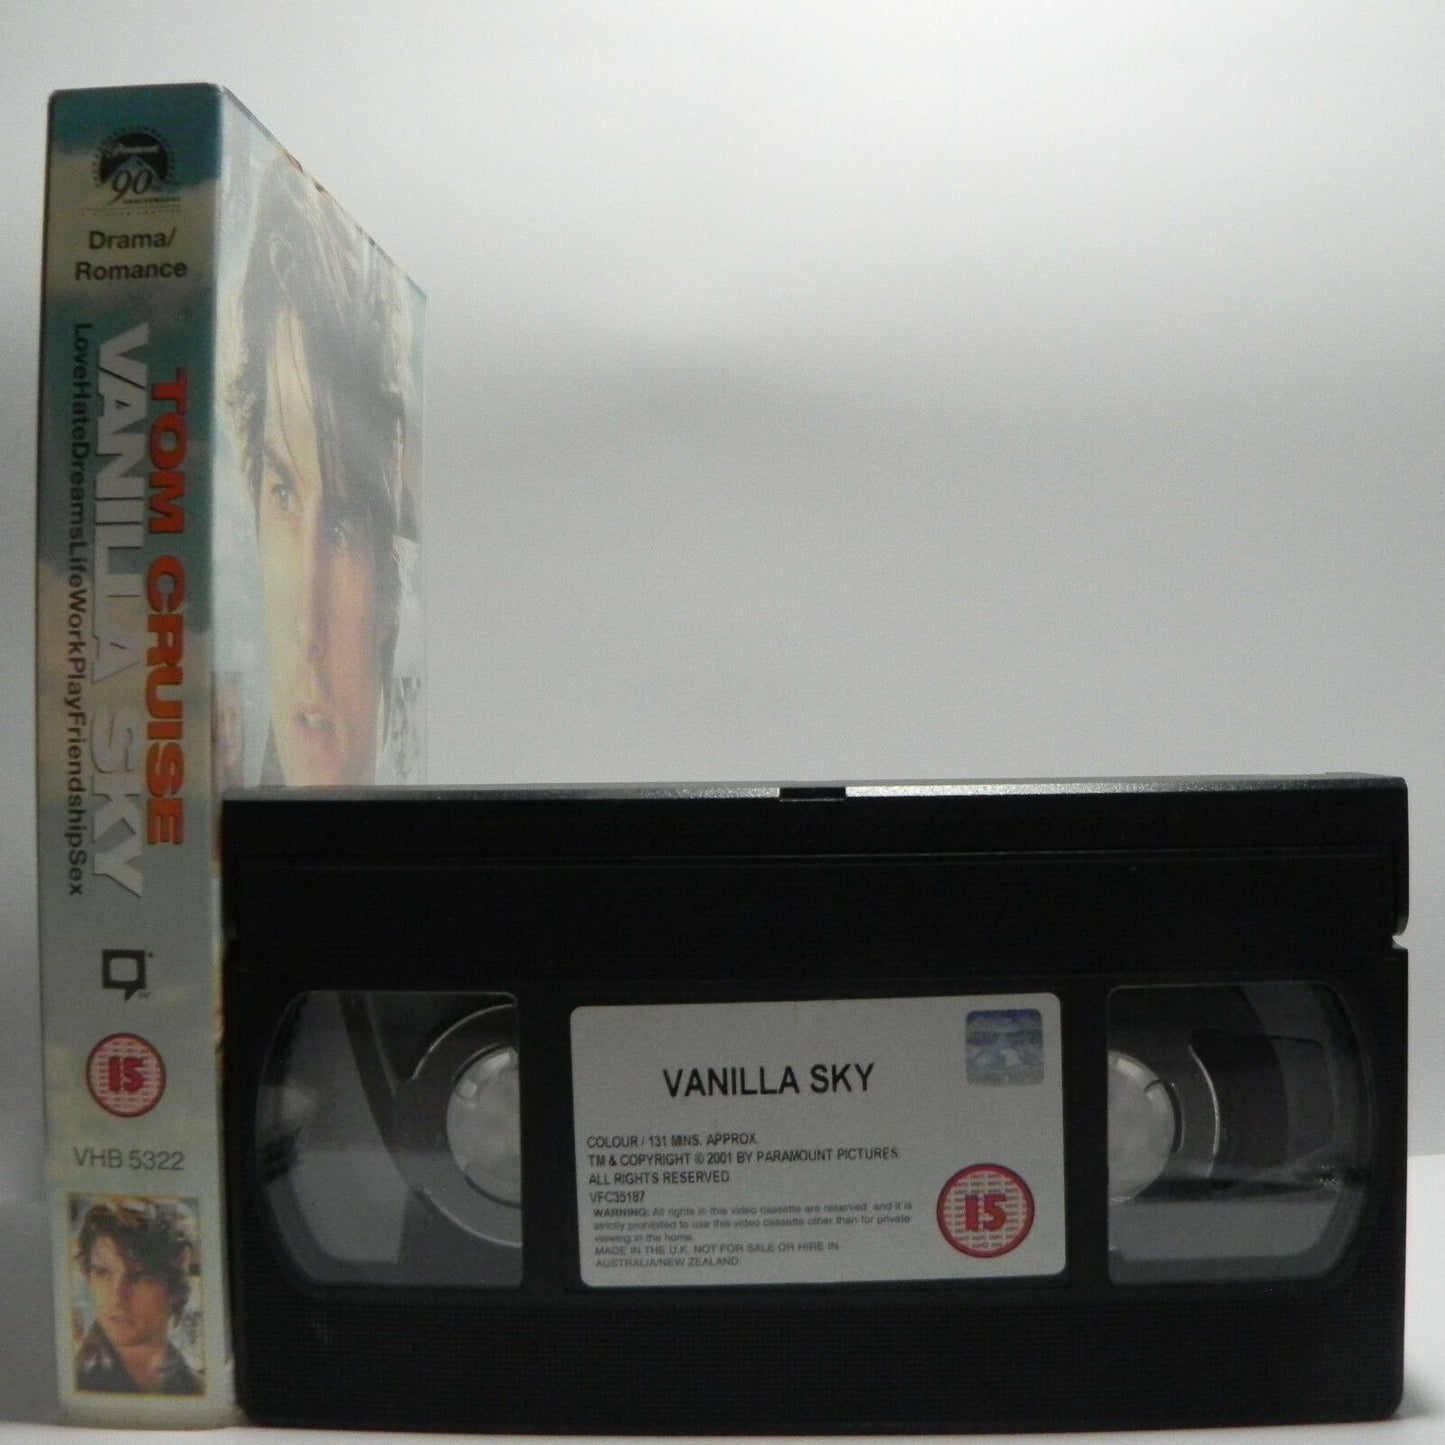 Vanilla Sky: Large Box - Sci-Fi Psychological Thriller - T.Cruise/C.Diaz - VHS-